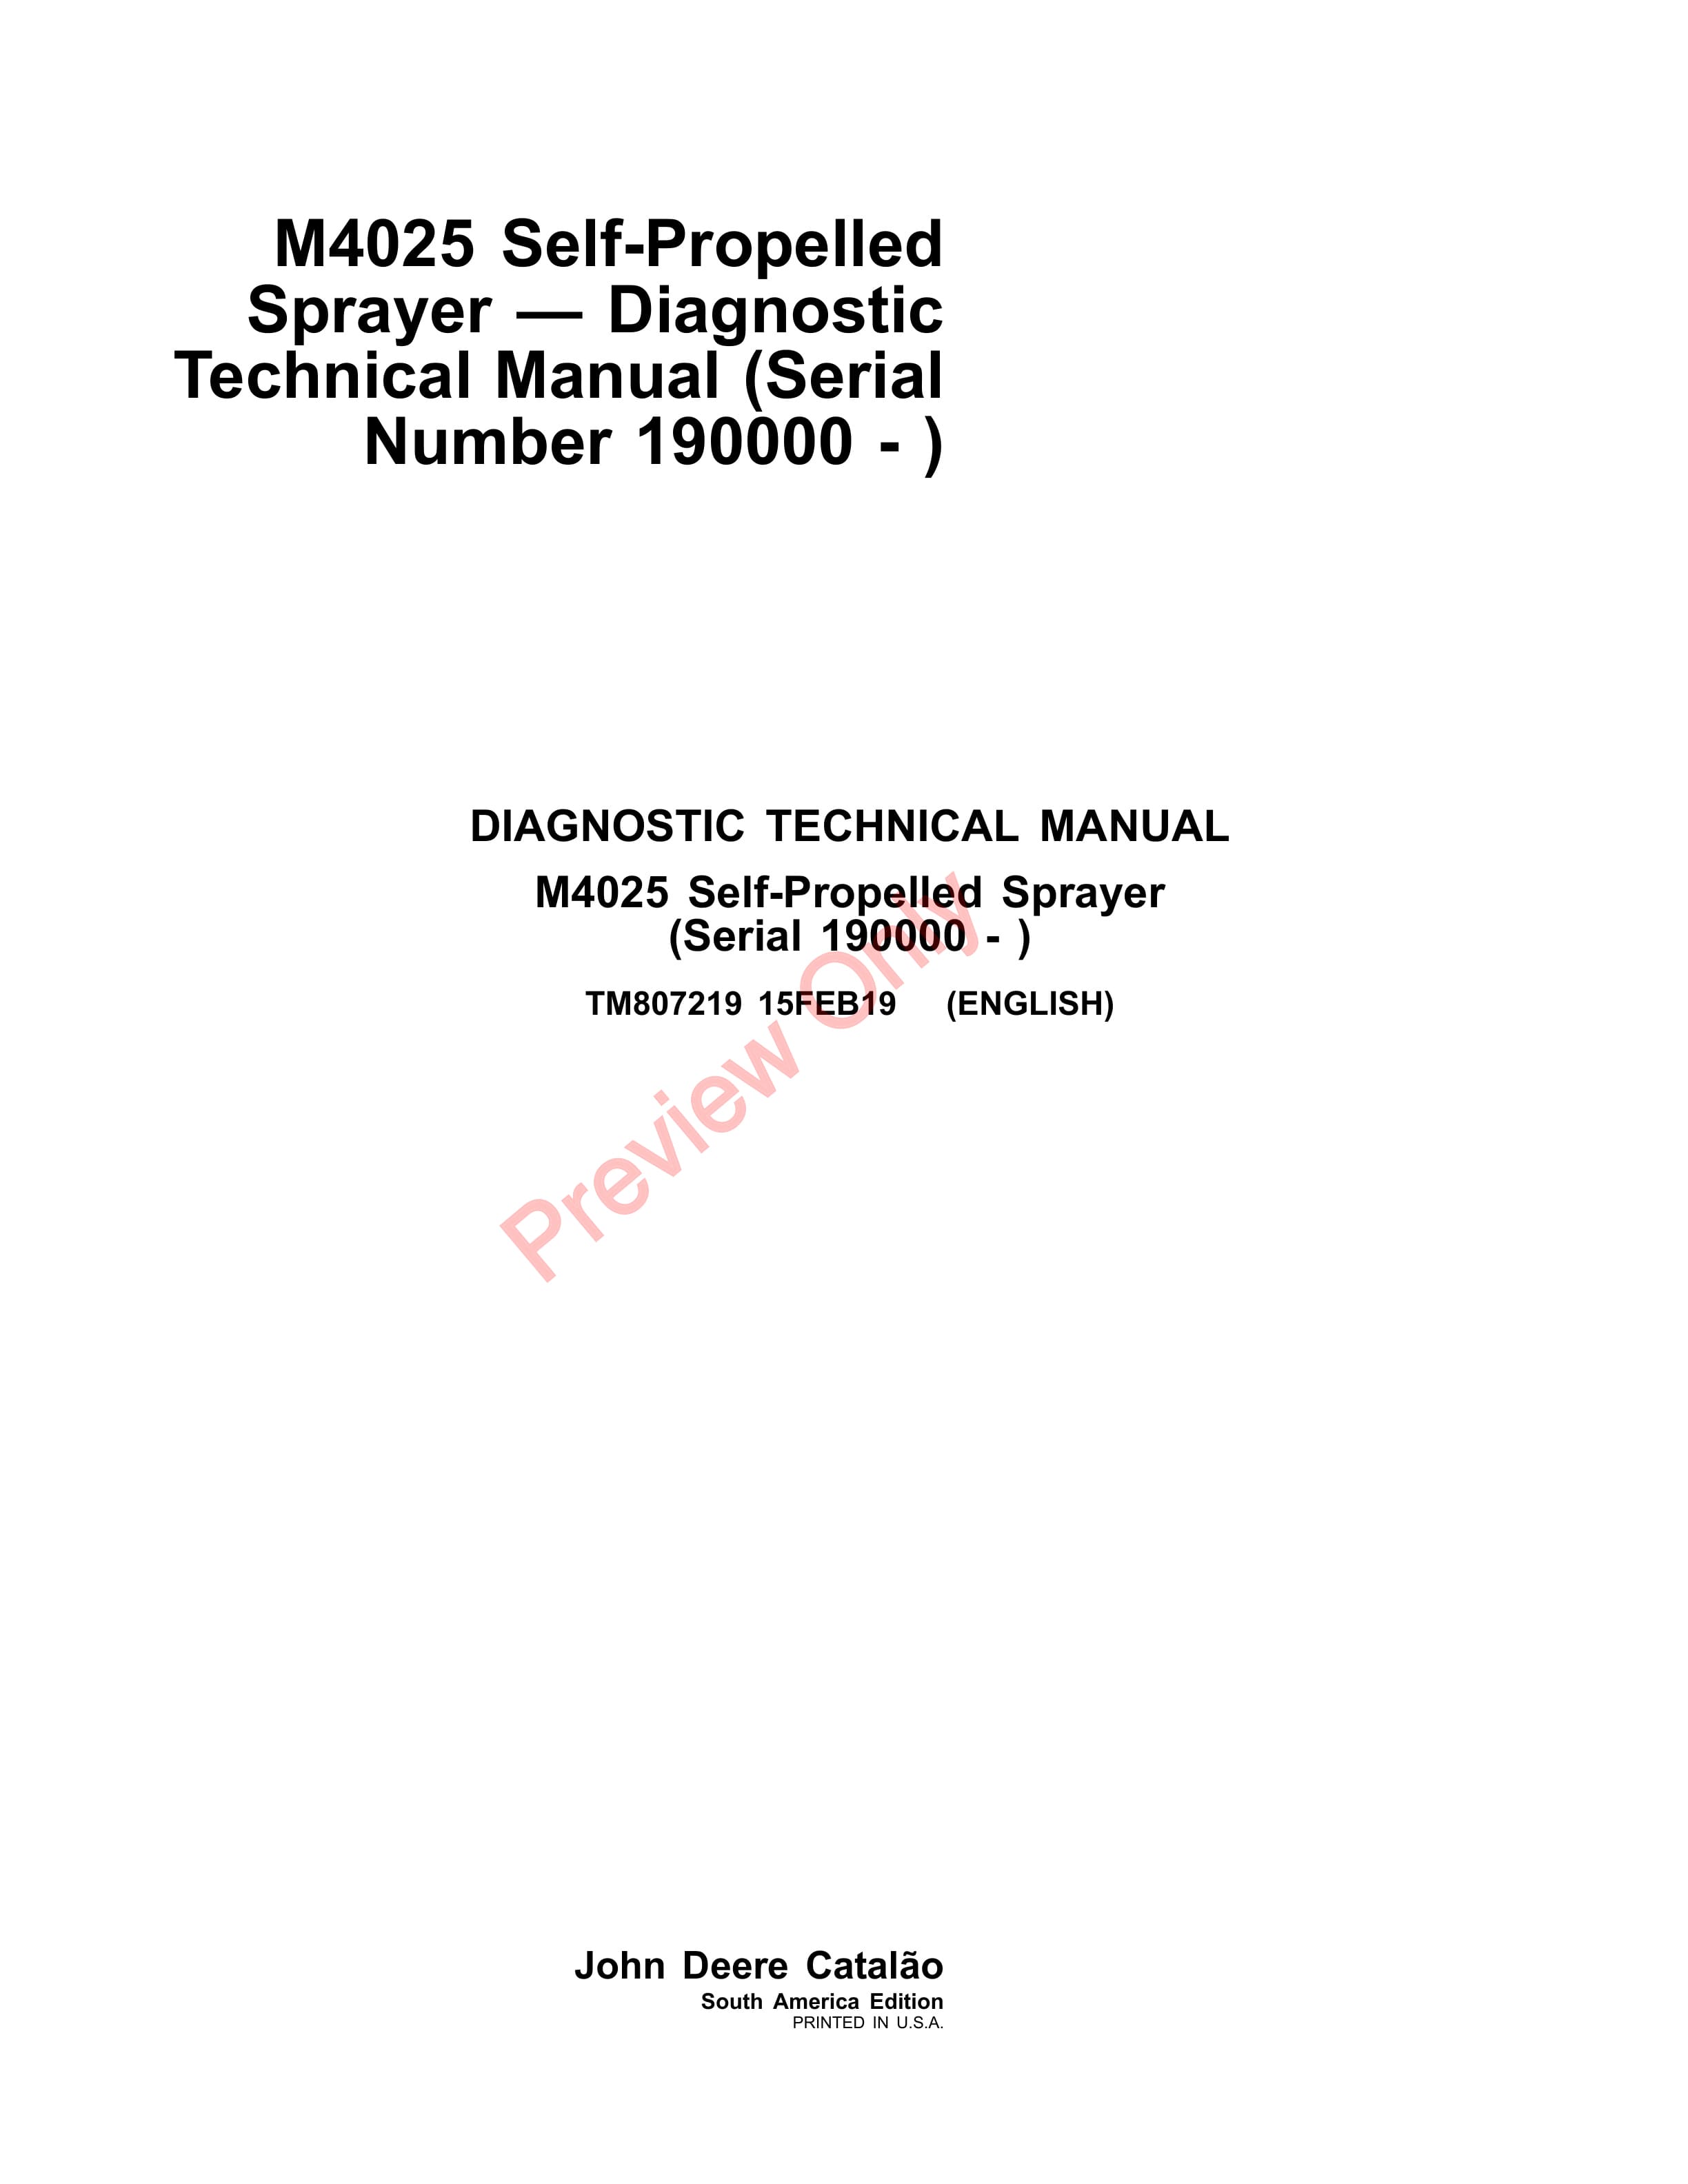 John Deere M4025 Self Propelled Sprayer Diagnostic Technical Manual TM807219 15FEB19 1